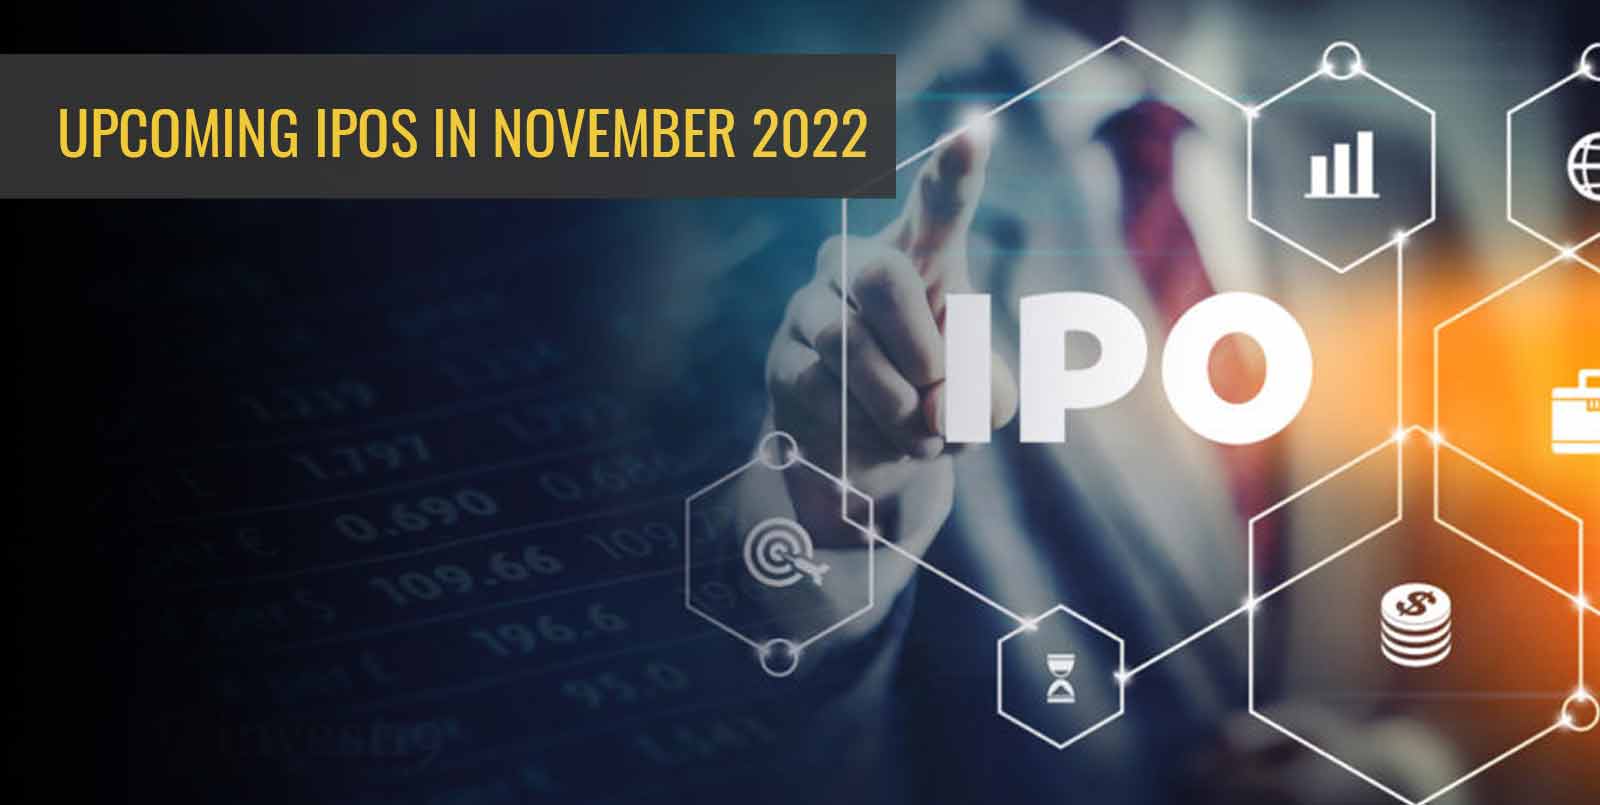 Upcoming IPOs in November 2022